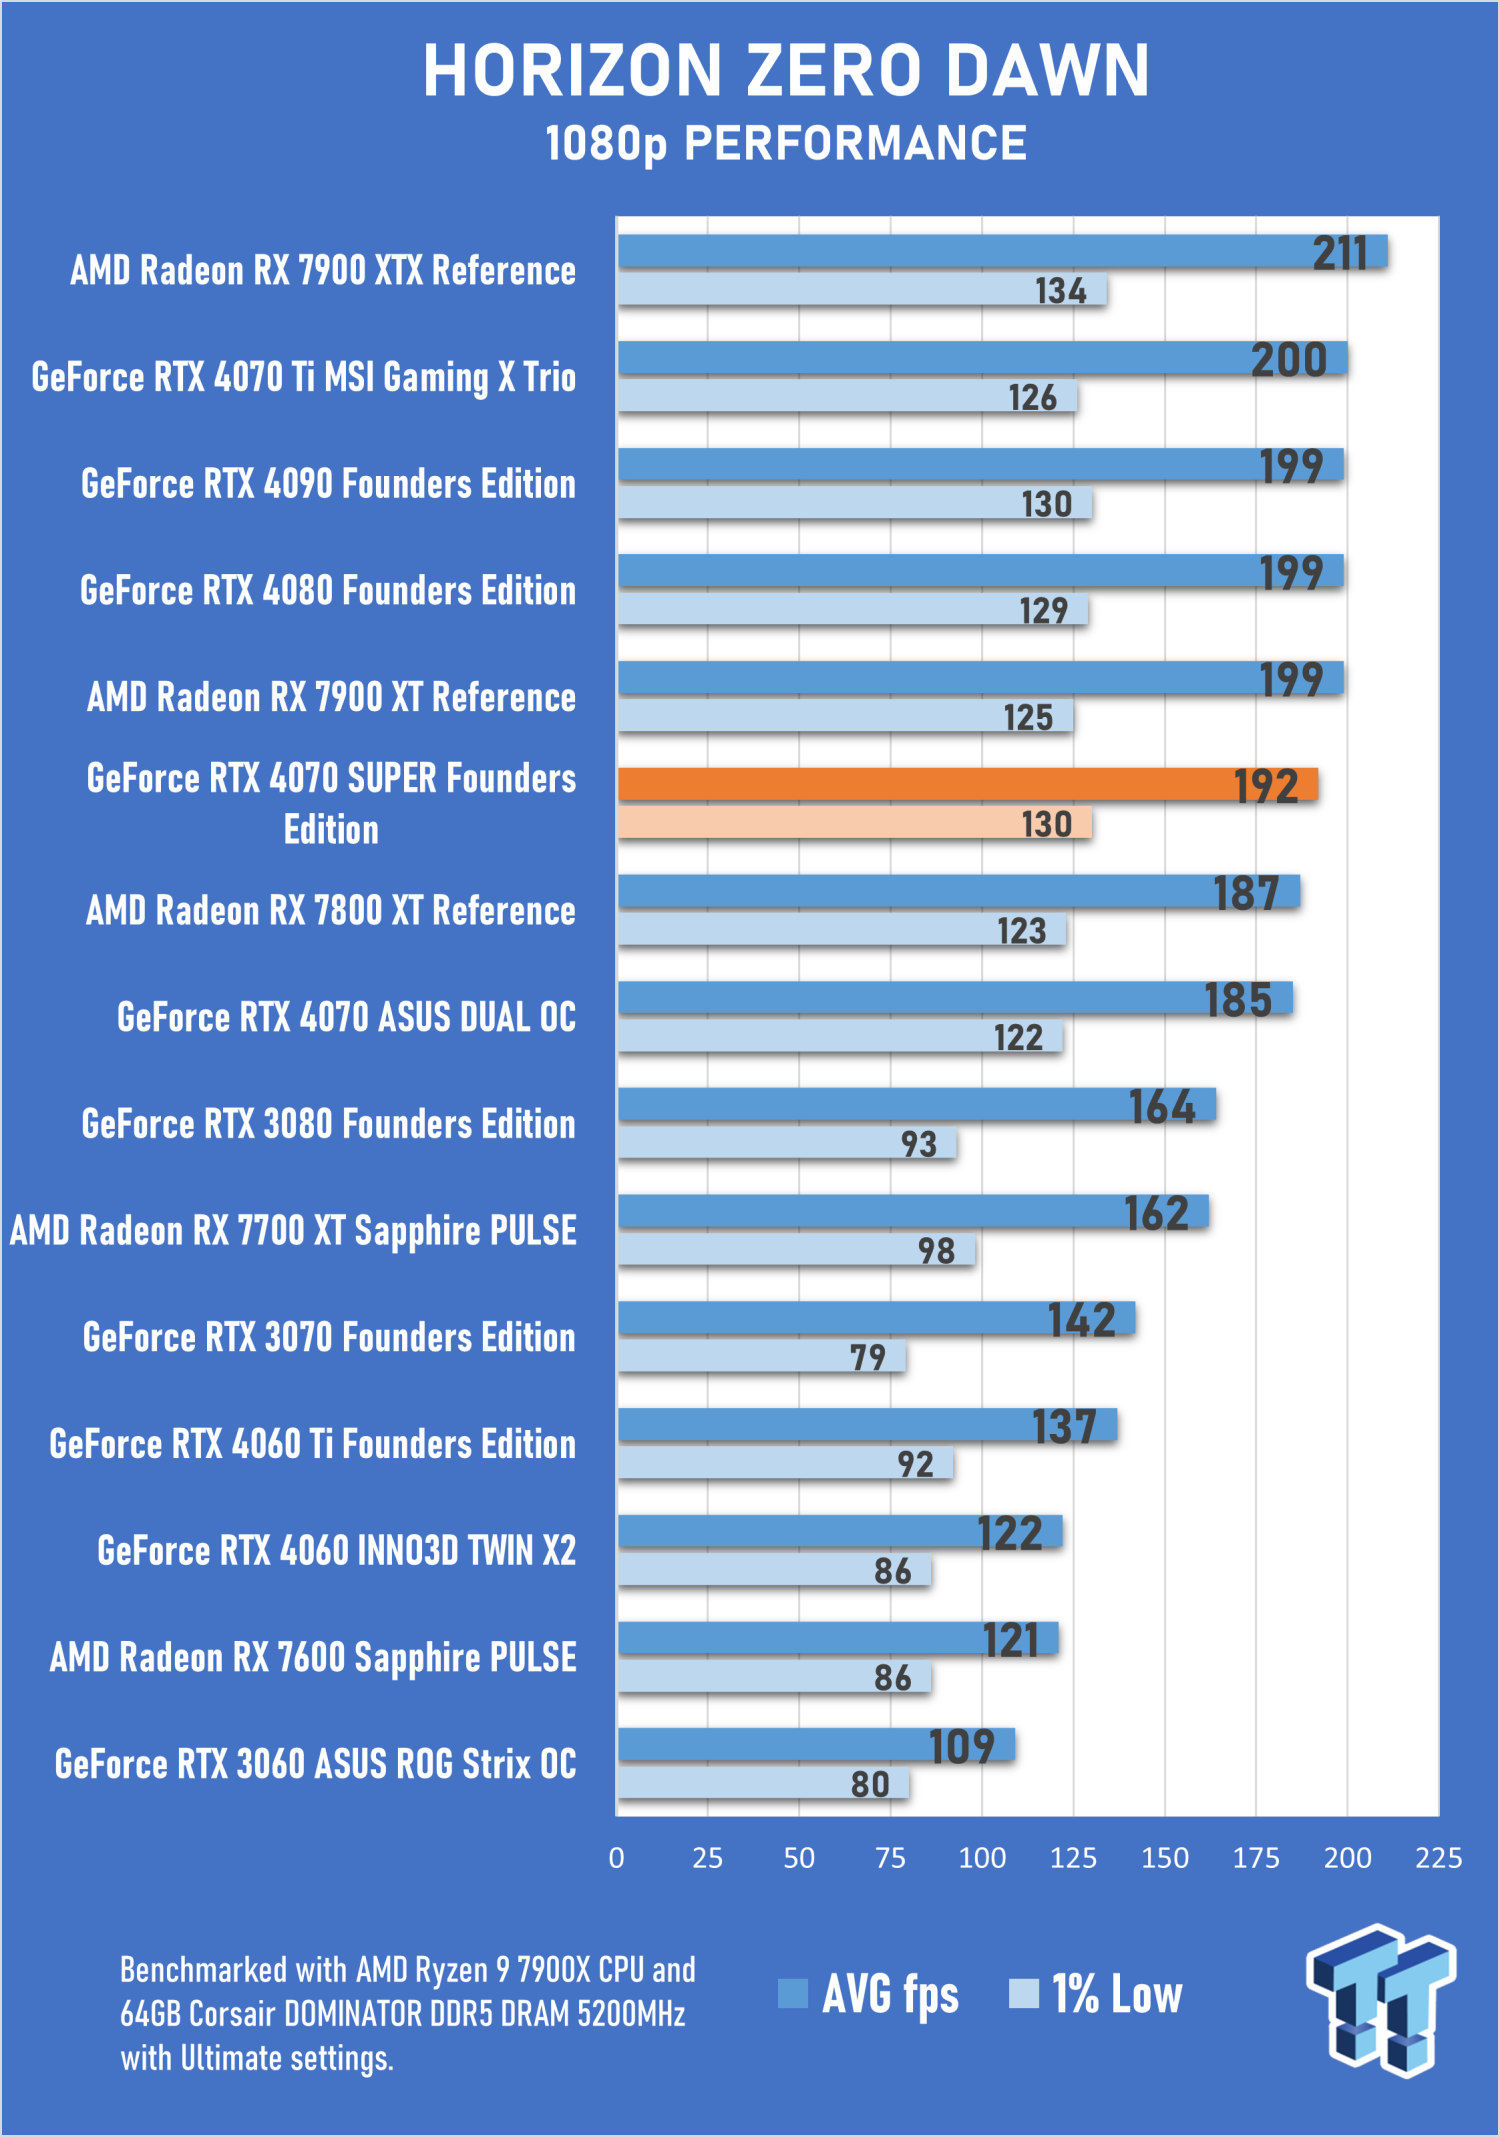 Nvidia RTX 4070 Ti Super GPU: Specs, Performance, and Value Compared., by  Jackson Luca